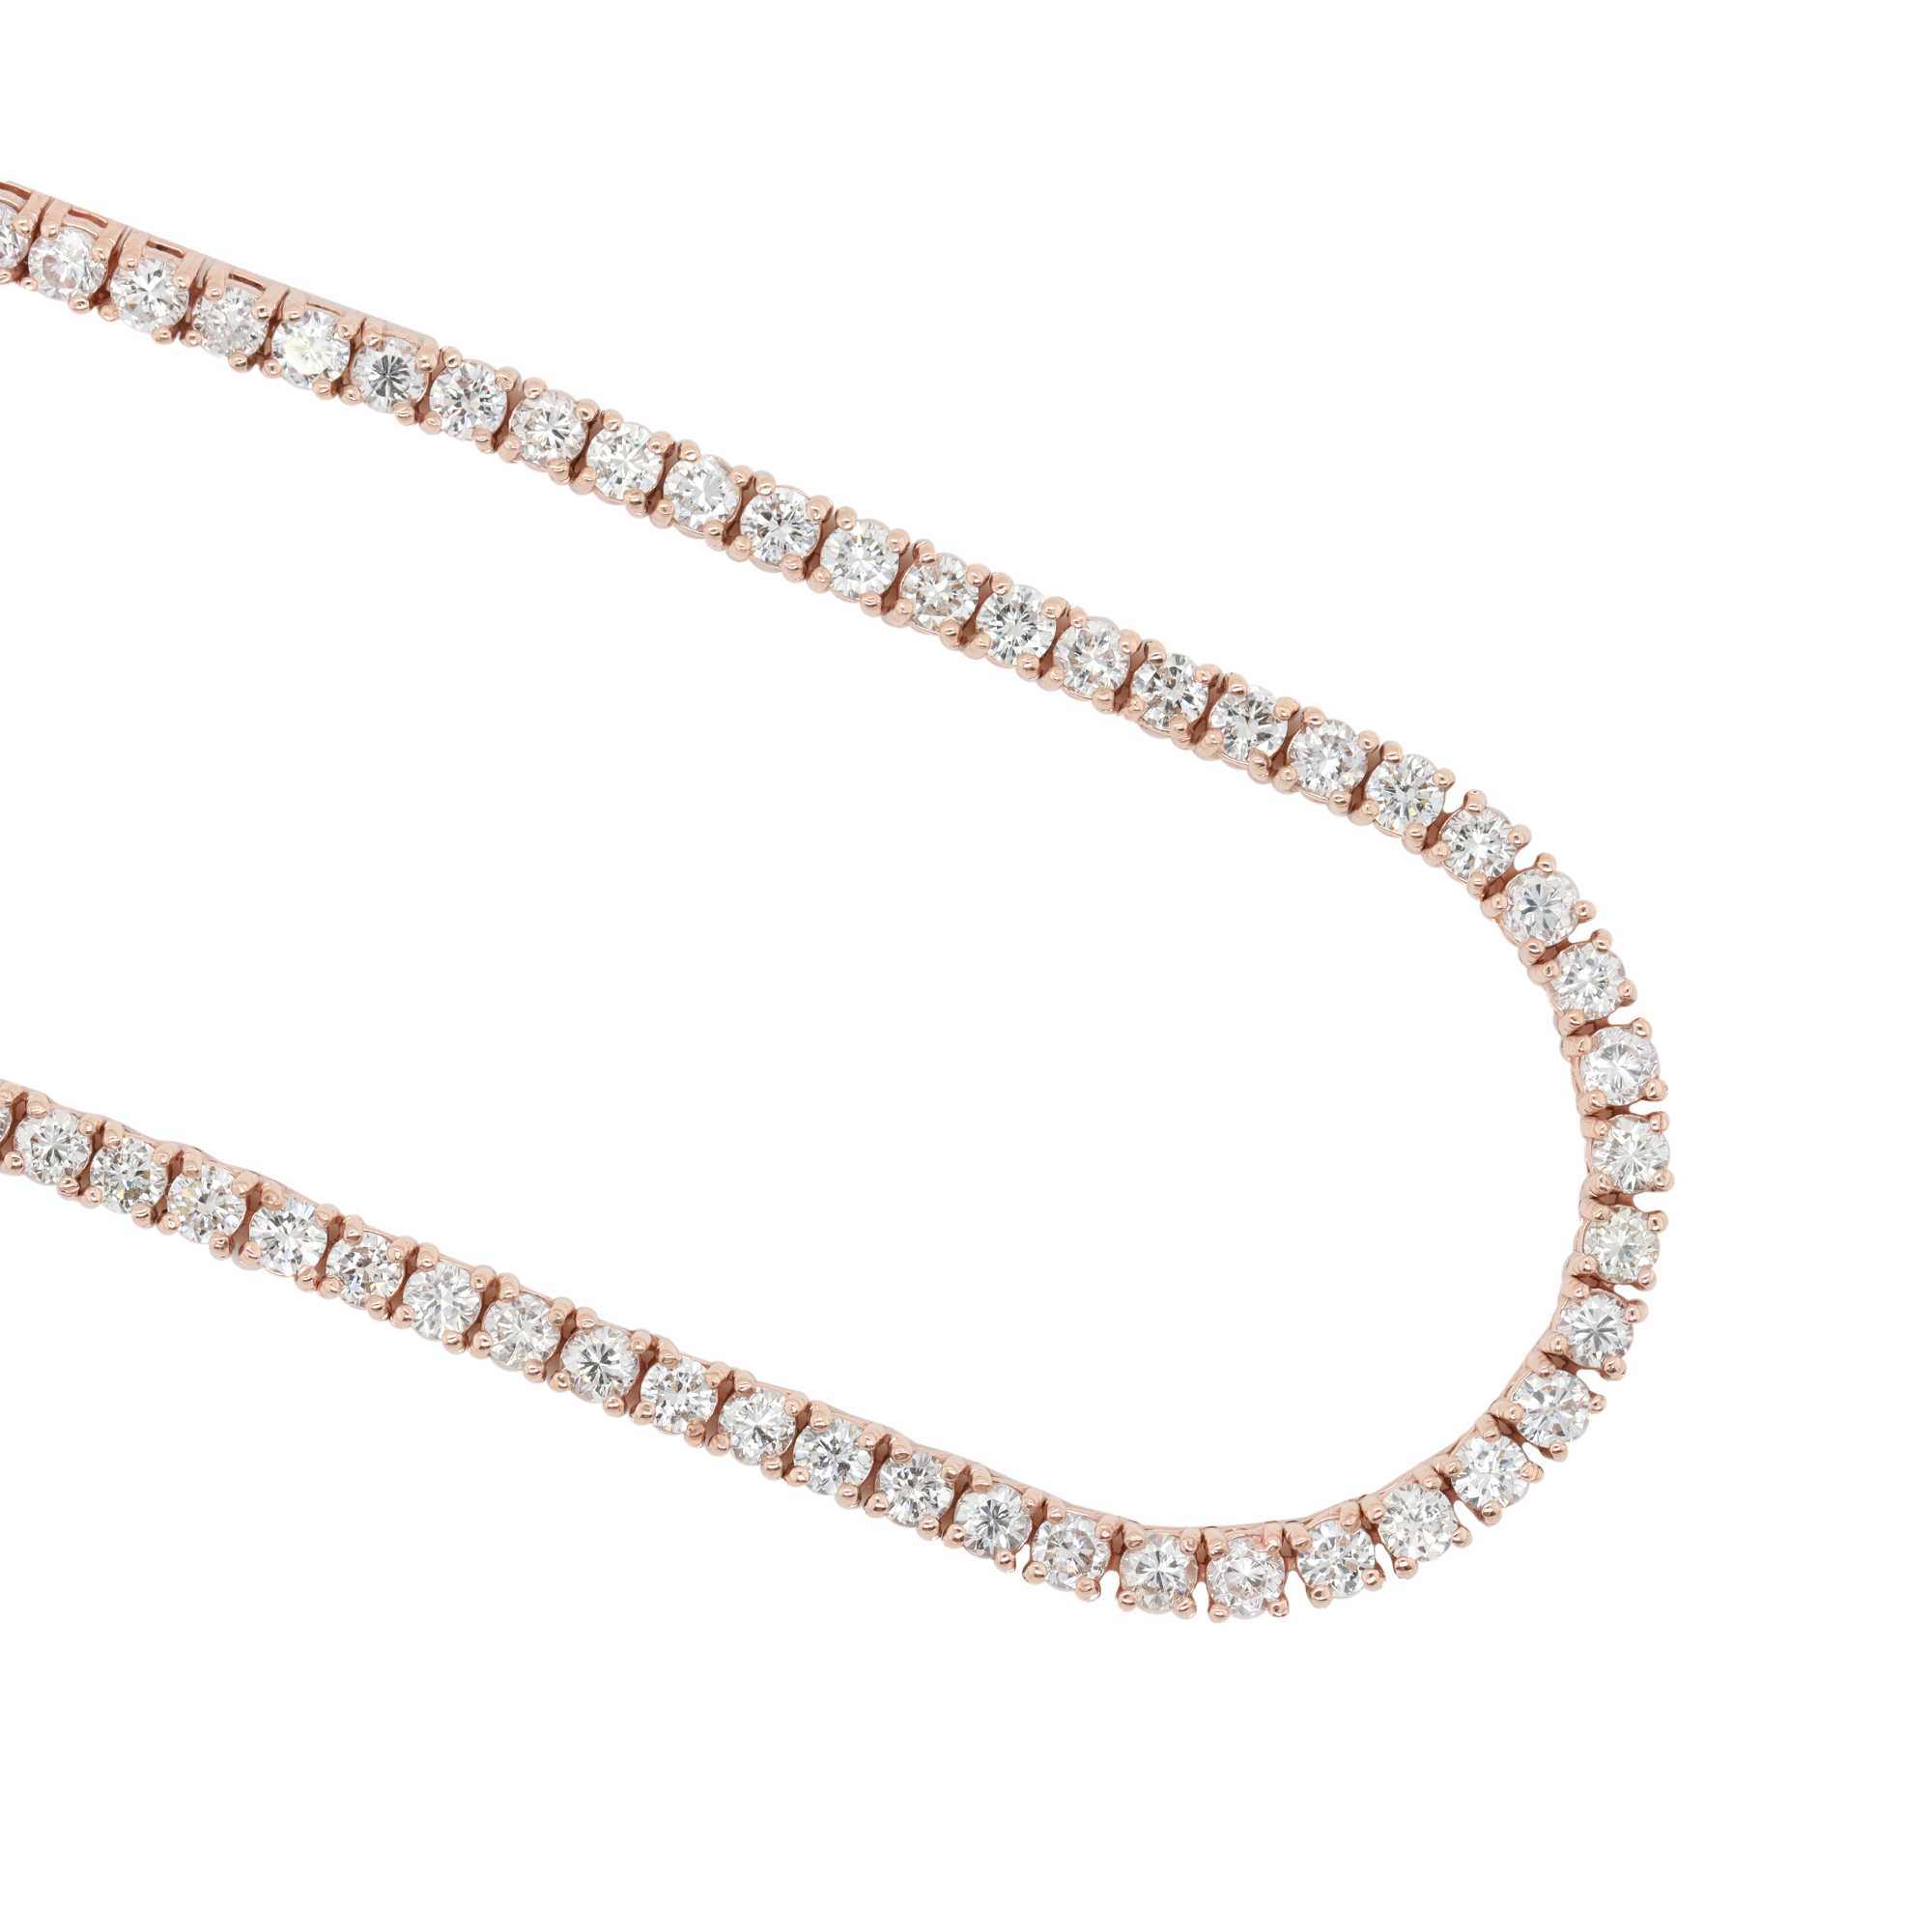 Shimmering Simplicity Diamond Necklace